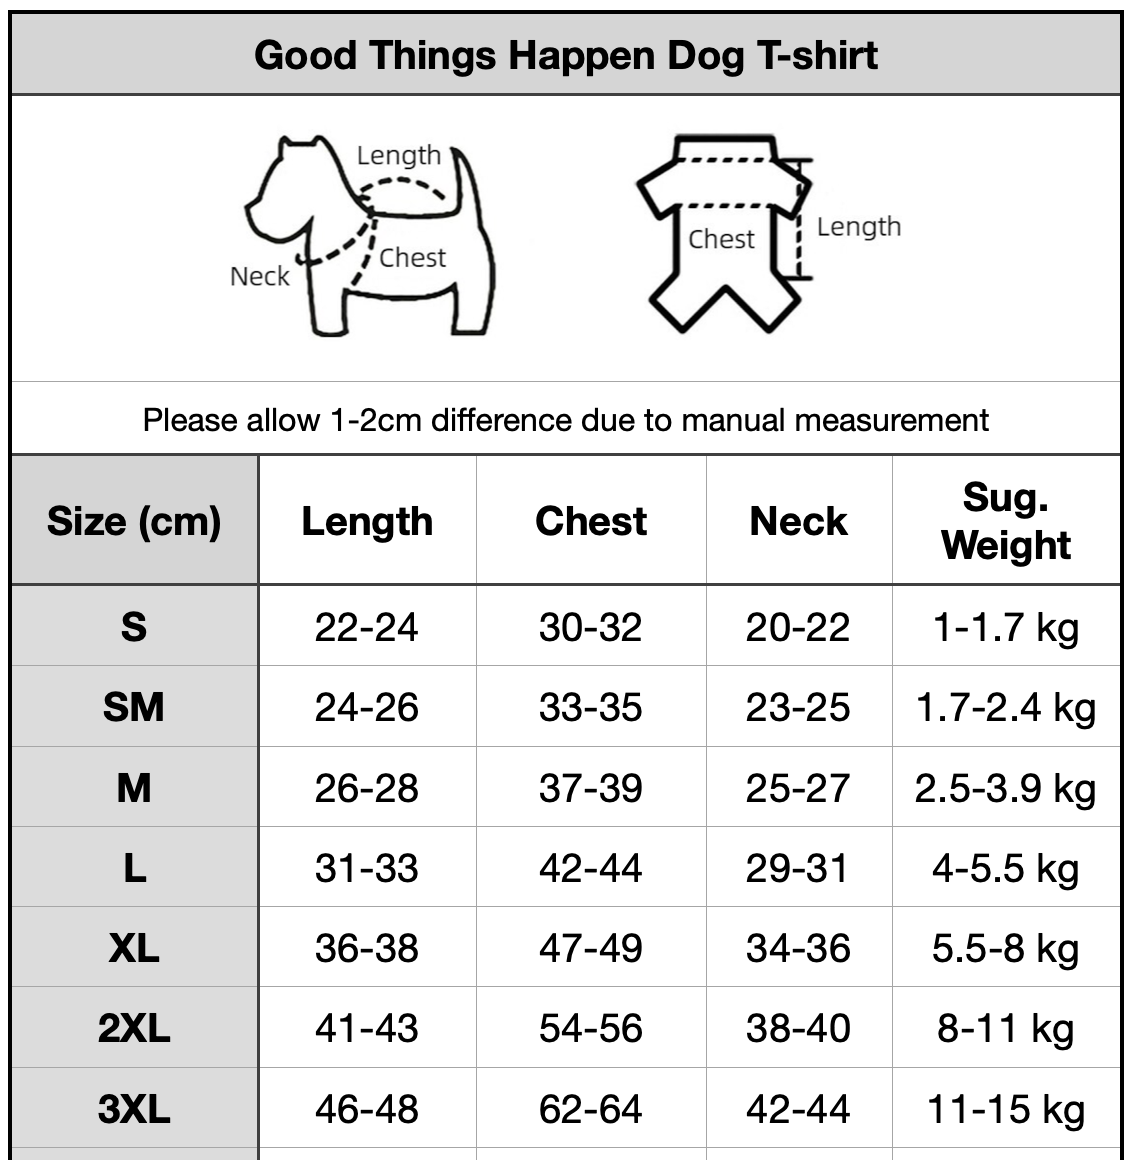 Good Things Happen Dog T-shirt